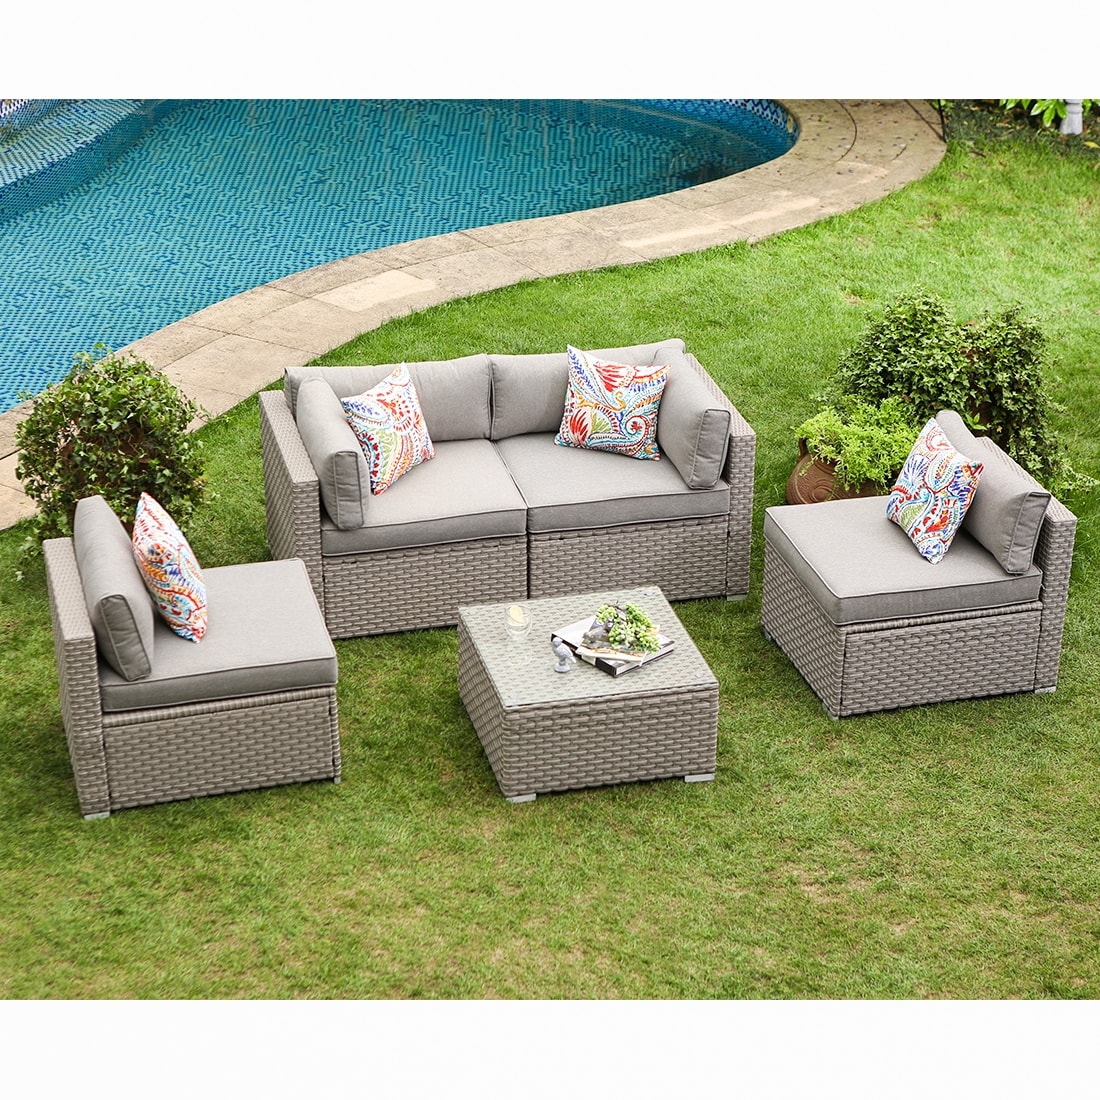 FLIEKS 5-Piece Outdoor Furniture Sets Wicker Patio Sectional Sofa Garden Conversation Set with Two Tea Tables Brown Wicker Beige Cushions 